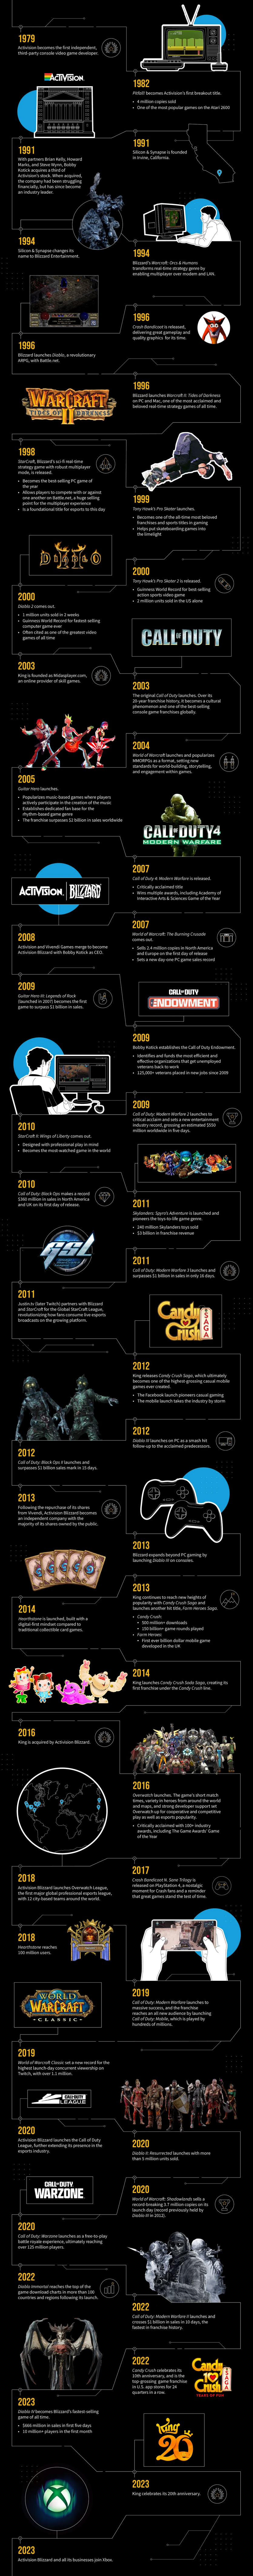 Історія Activision Blizzard